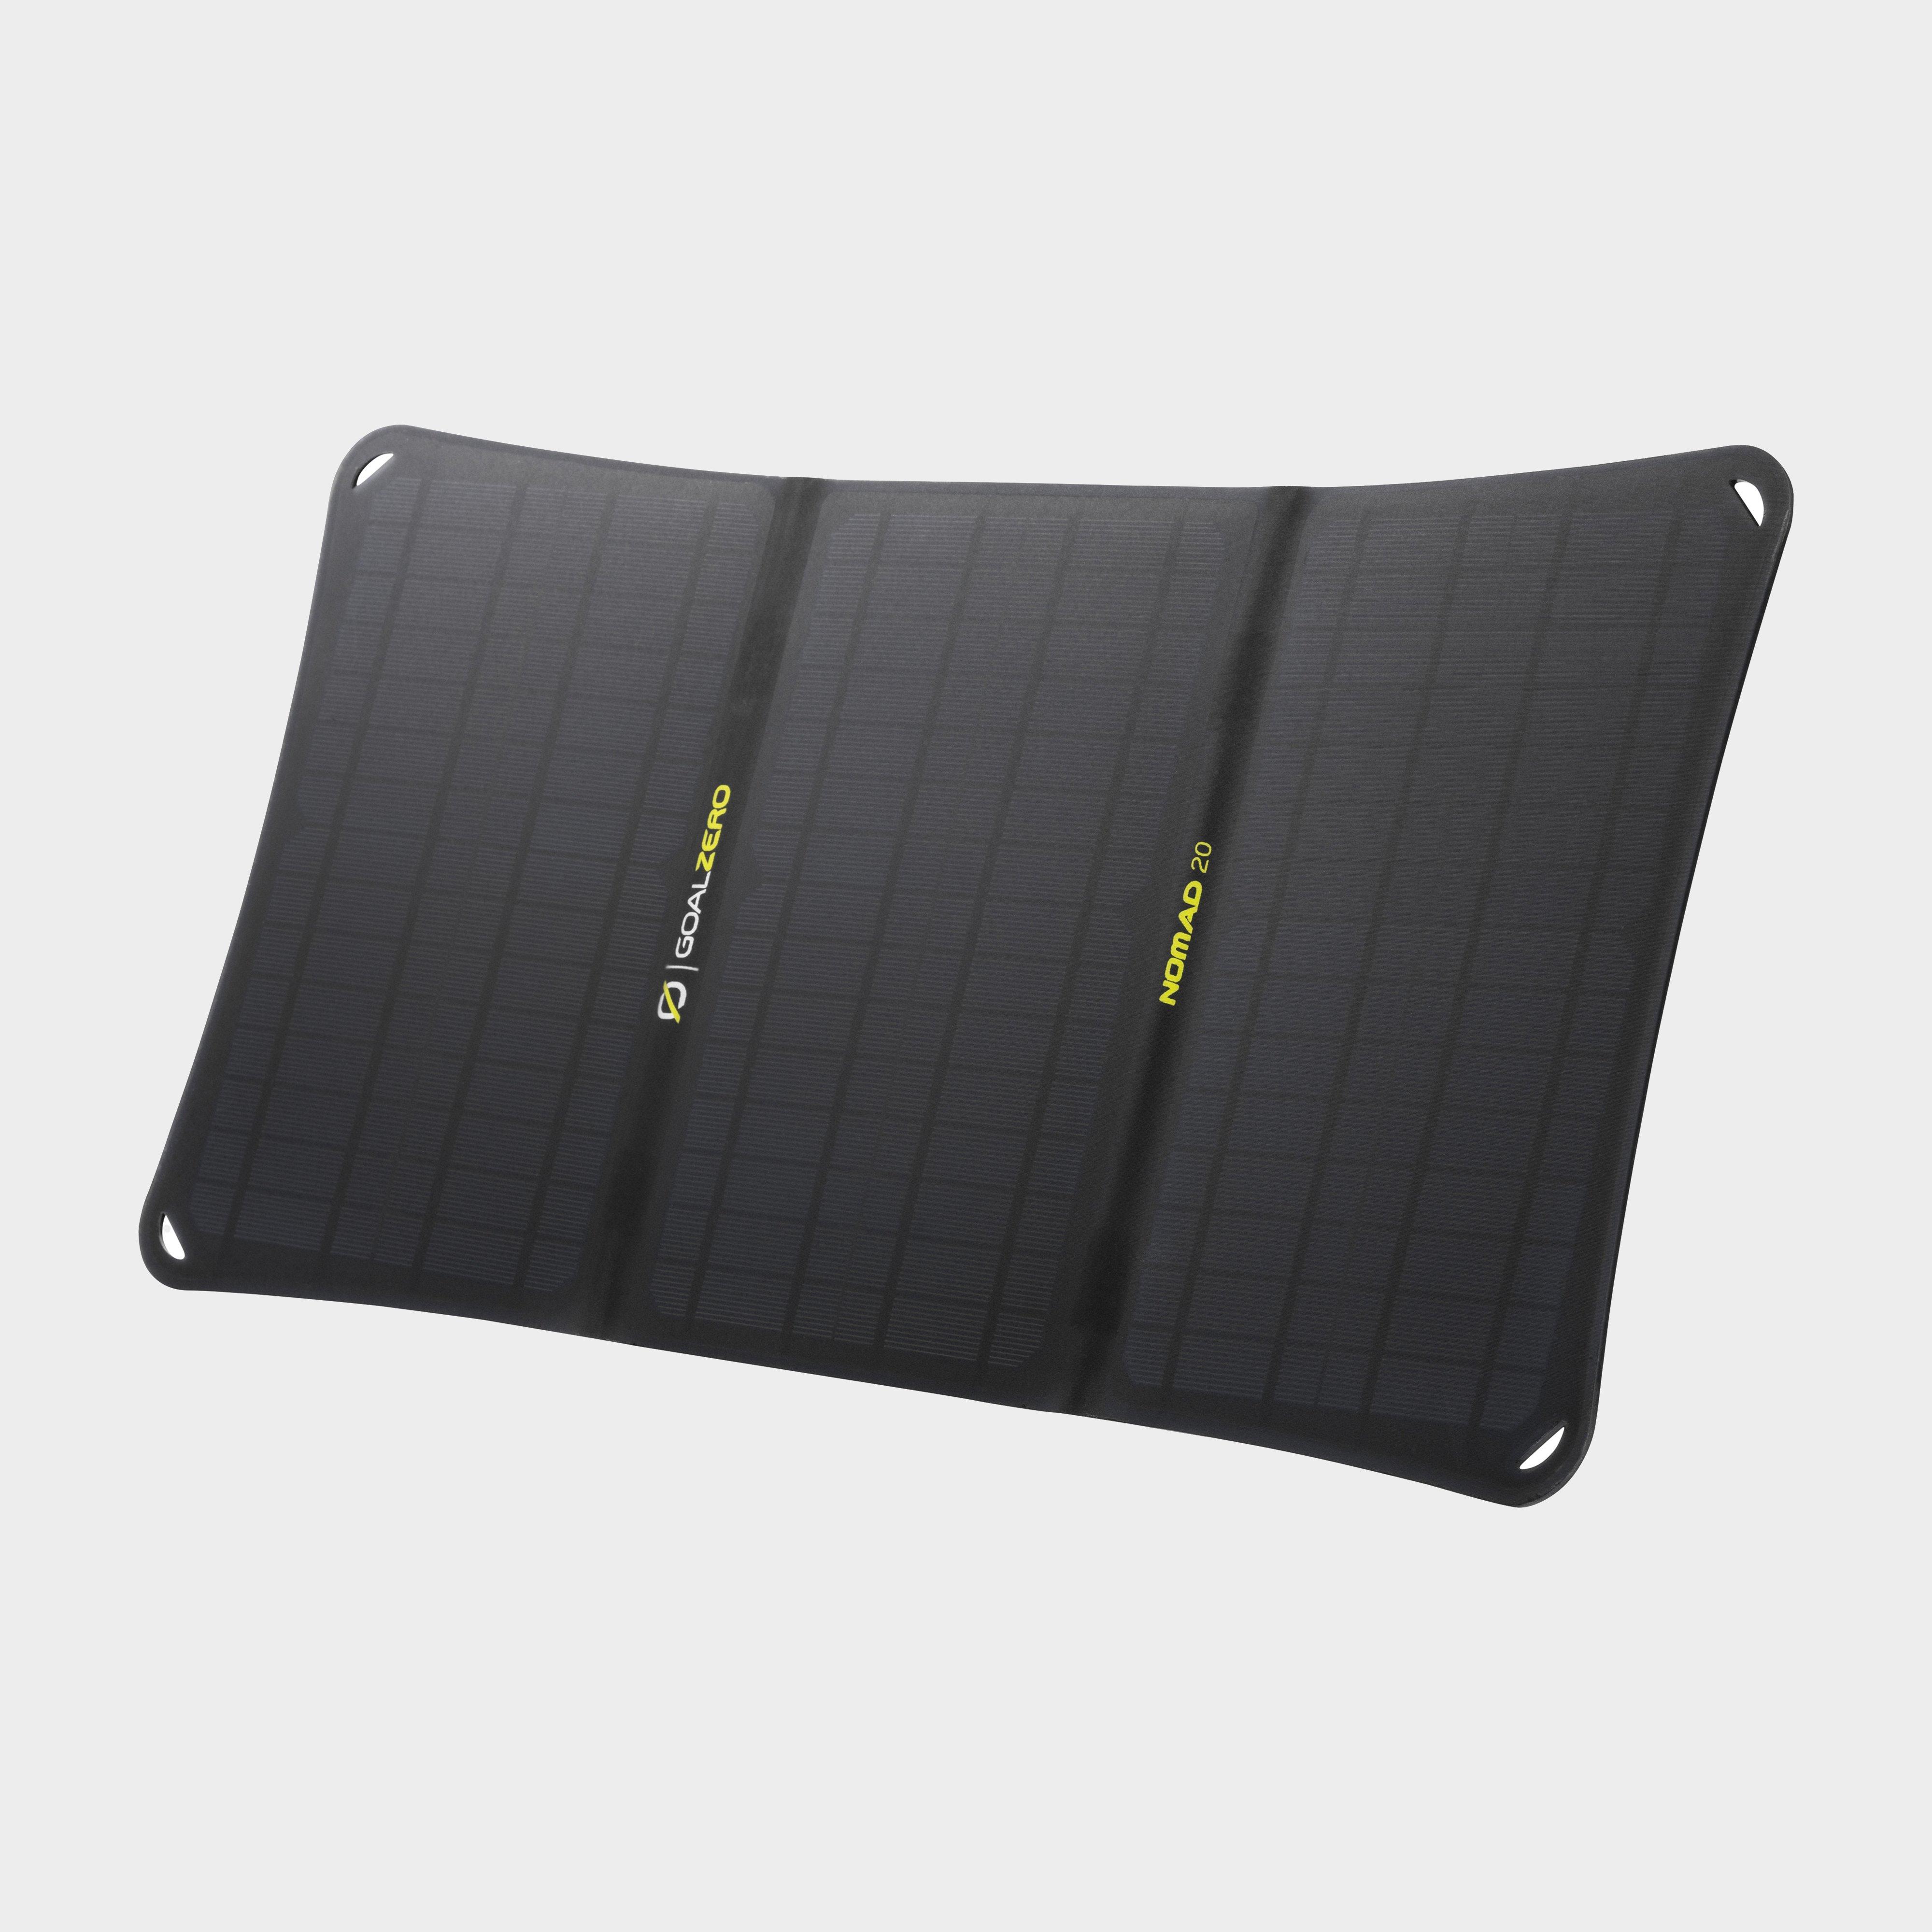  Goal Zero Nomad 20 Solar Panel